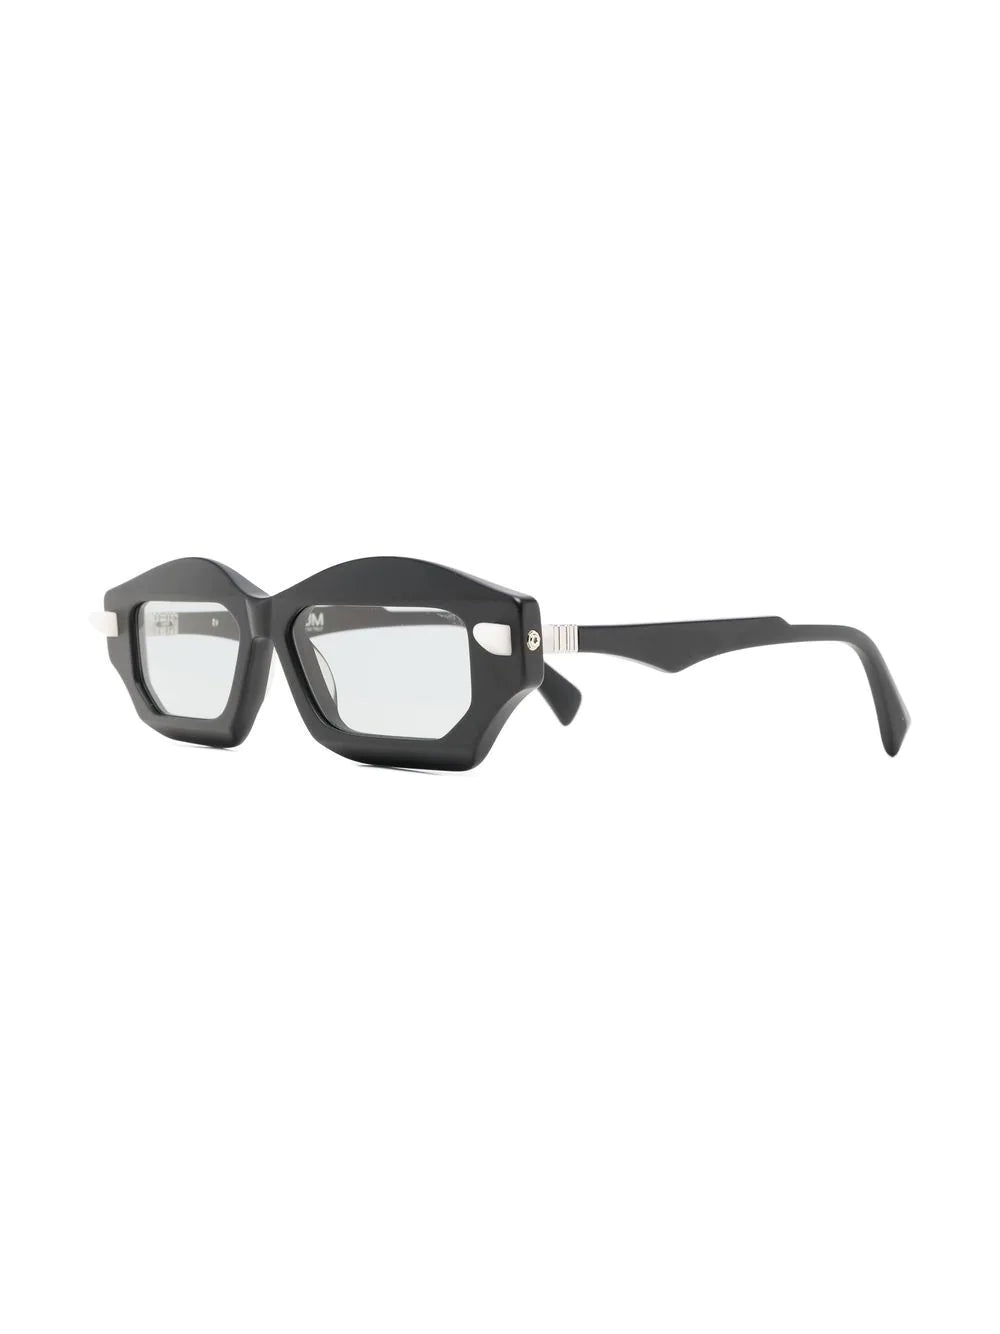 Q6 geometric-frame glasses - SHEET-1